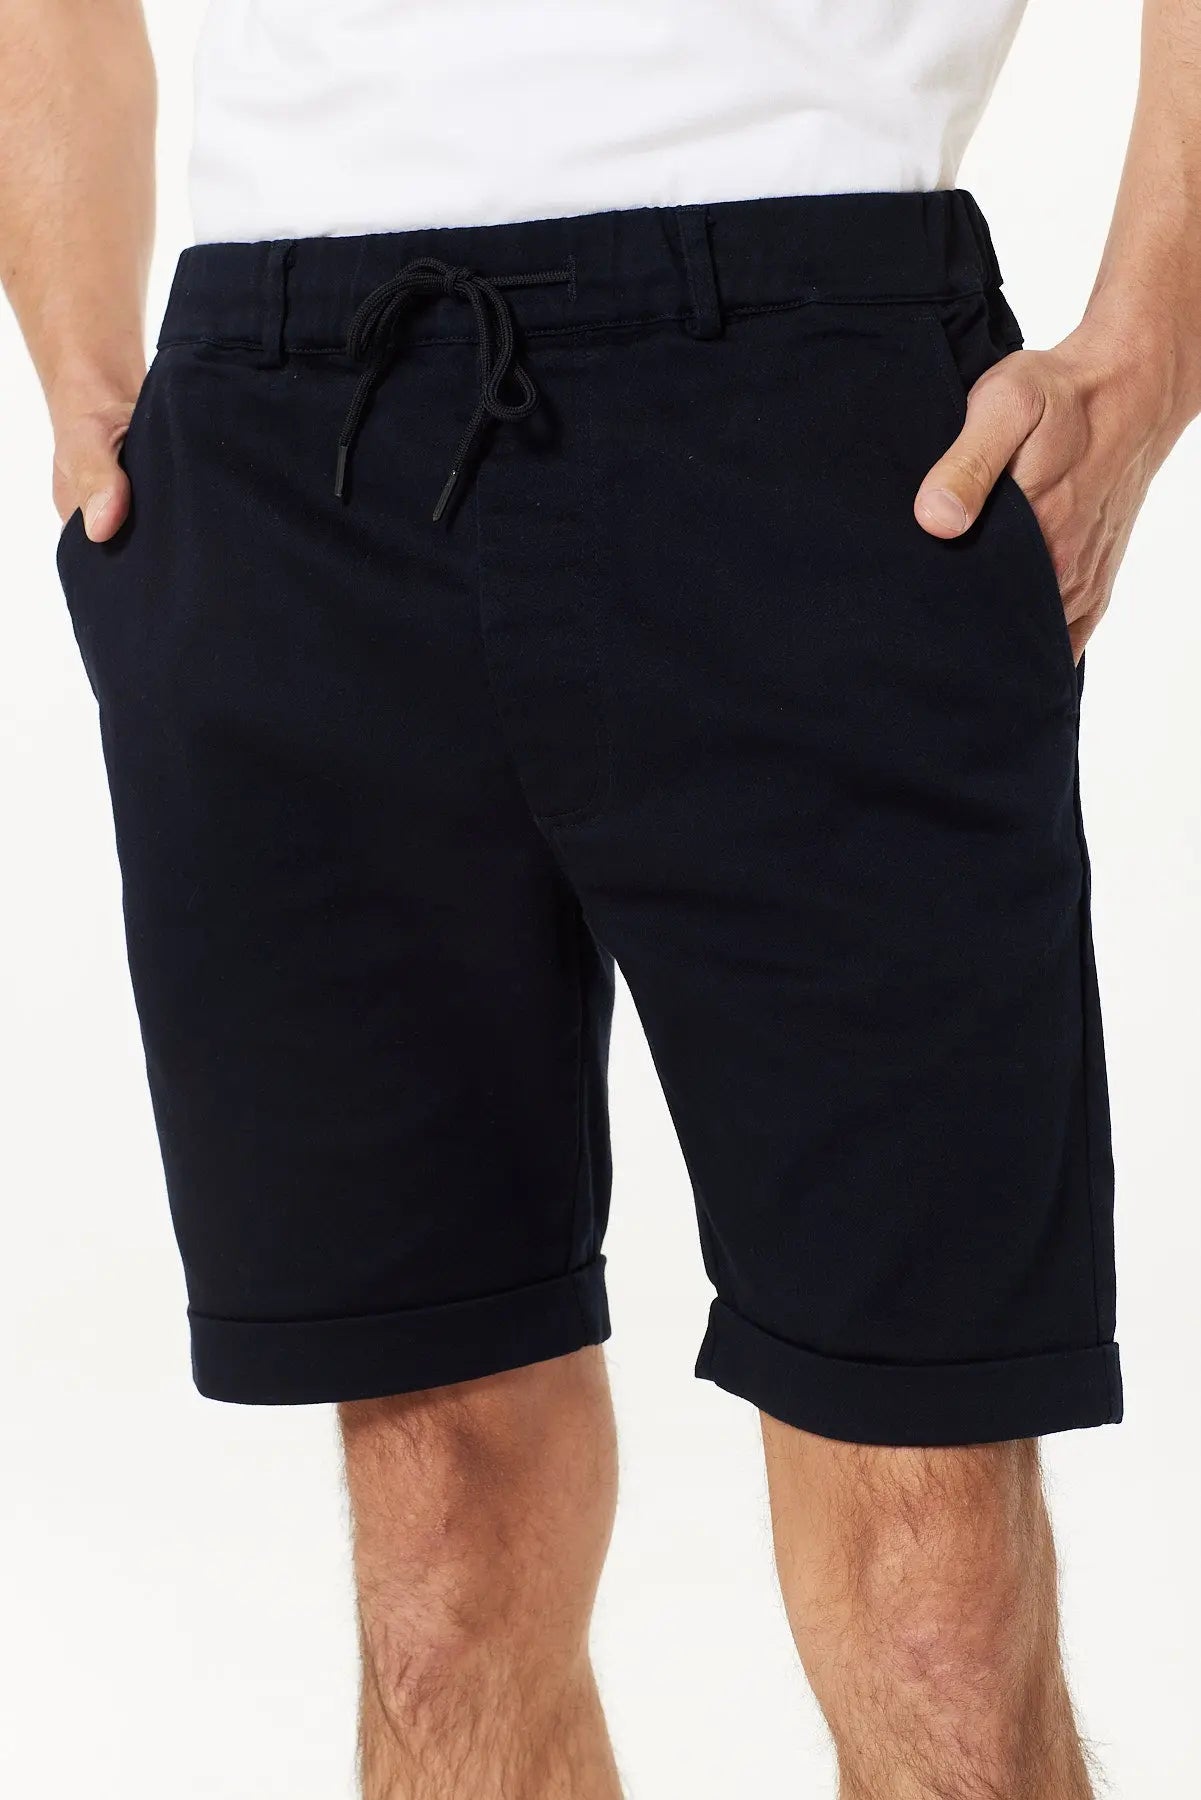 Edgeware Super Flex Shorts - Navy Wear London